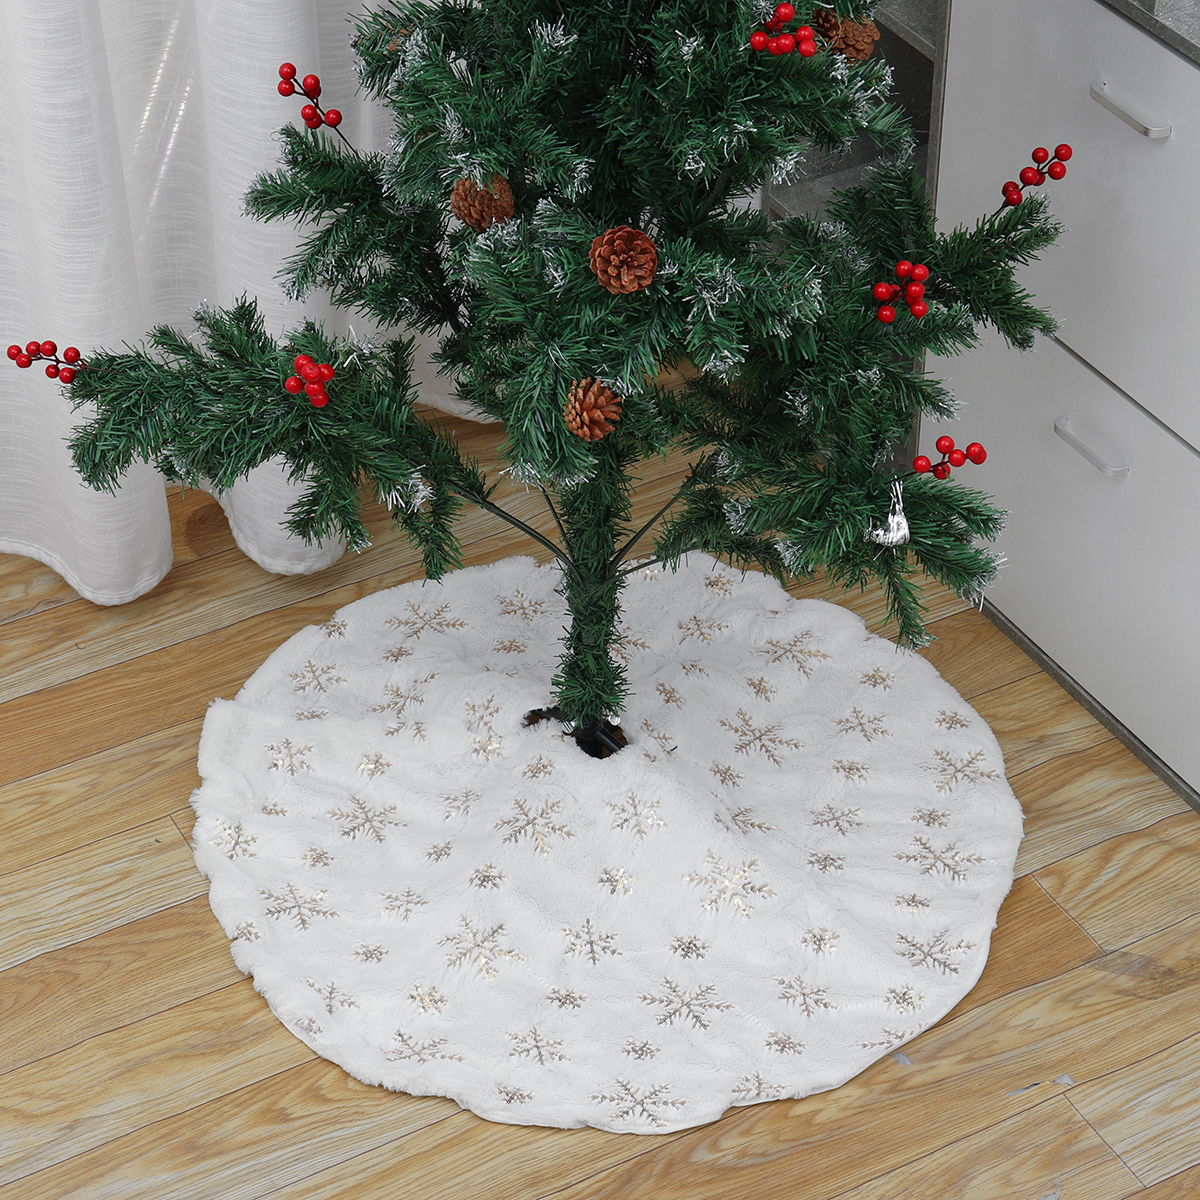 3548inch-Christmas-Tree-Dress-Skirt-Decor-Carpet-Xmas-Decoration-for-2020-Christmas-Party-Decoration-1775188-13